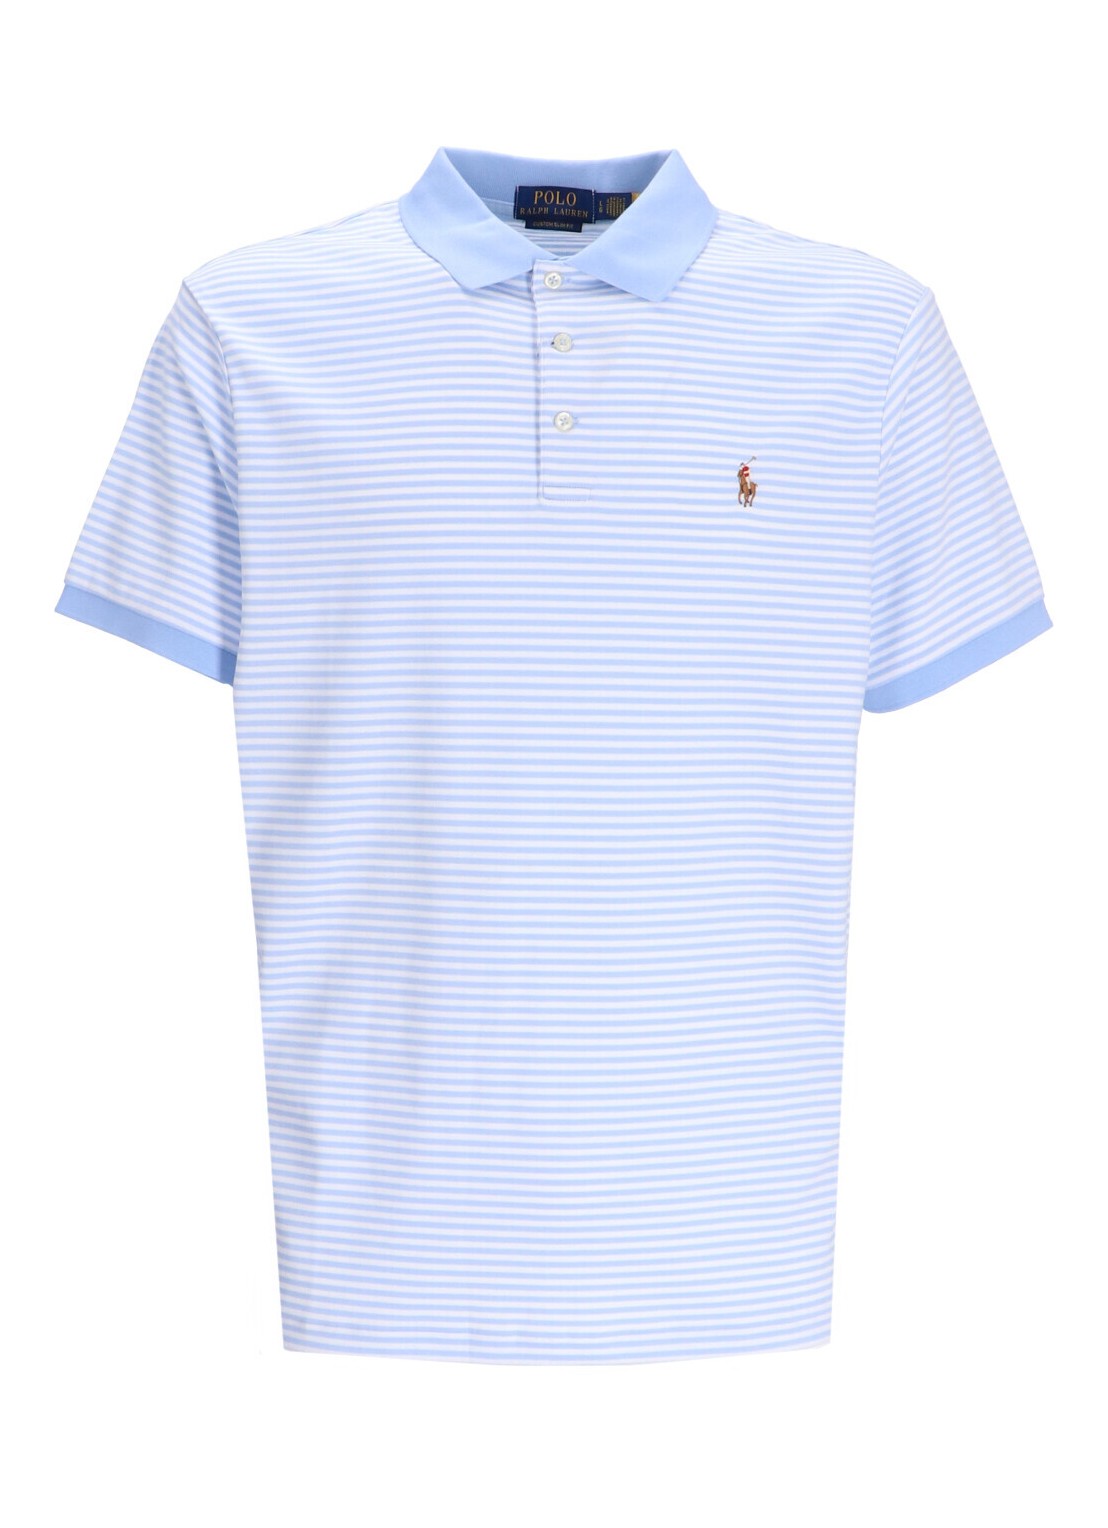 Polo polo ralph lauren polo man ssydkcm15-short sleeve-polo shirt 710929079002 blue bell white talla